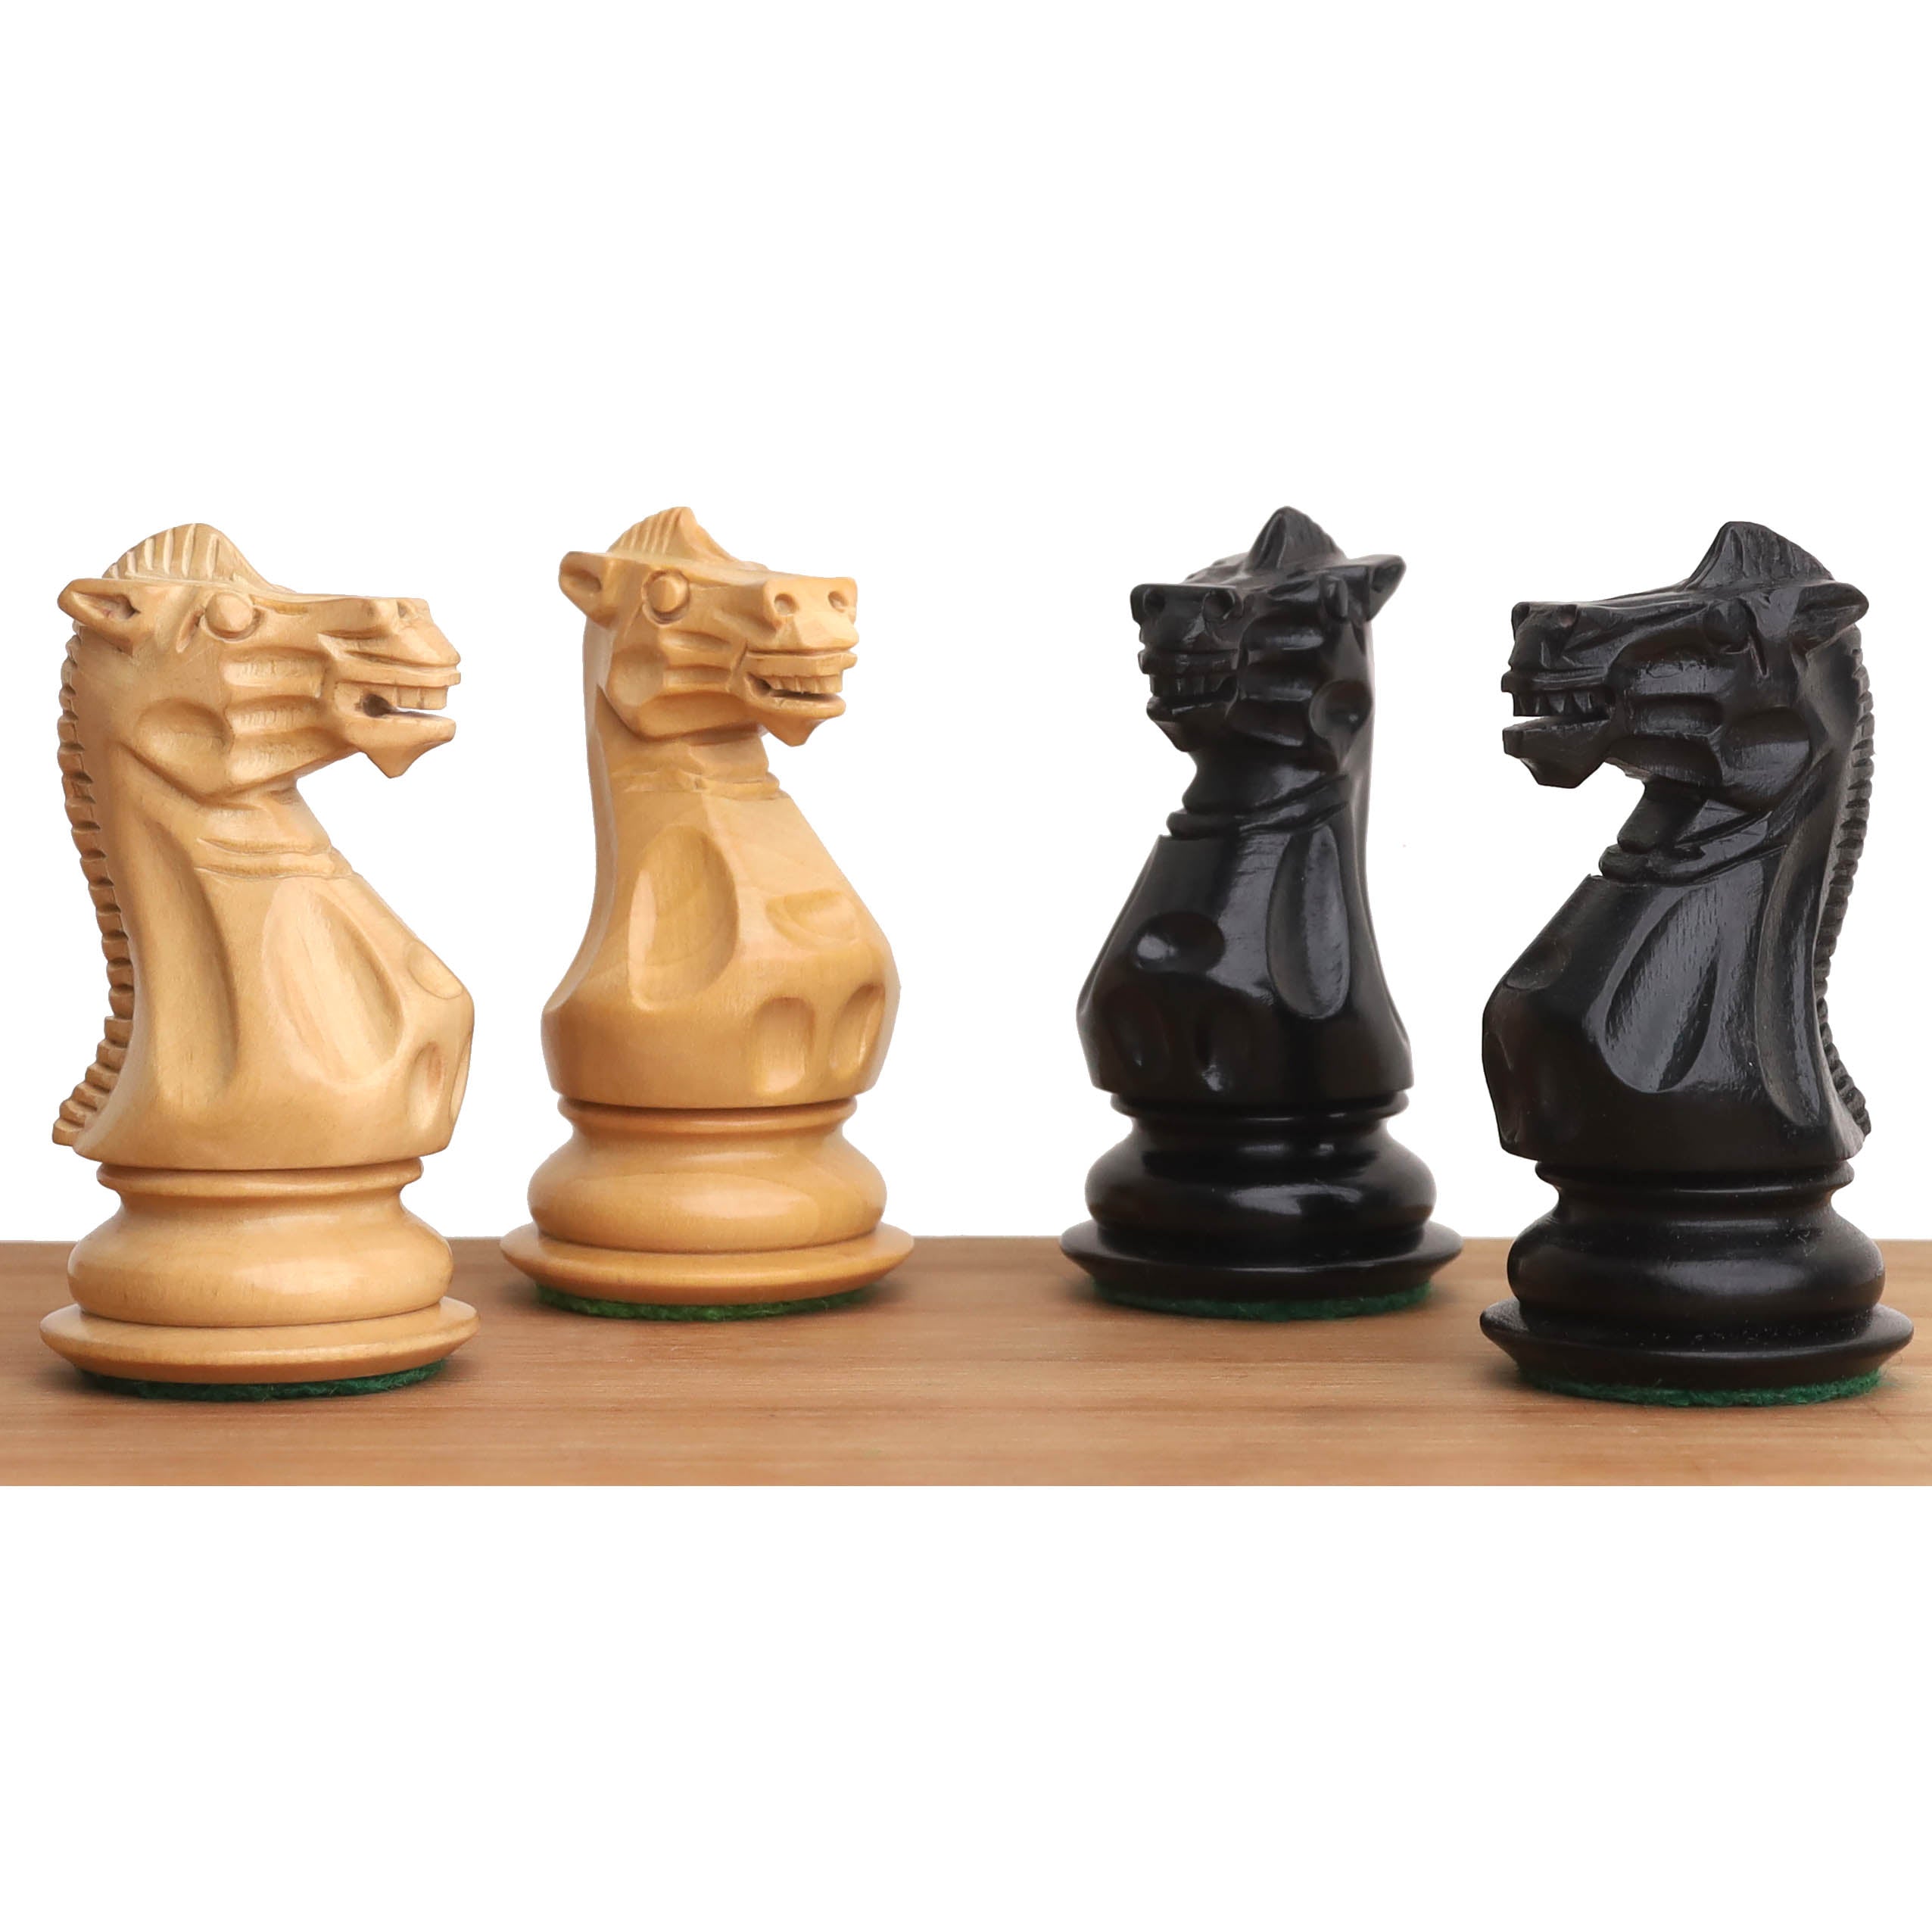 The Royal Knight Series Boxwood & Ebonized Luxury Wood Chess